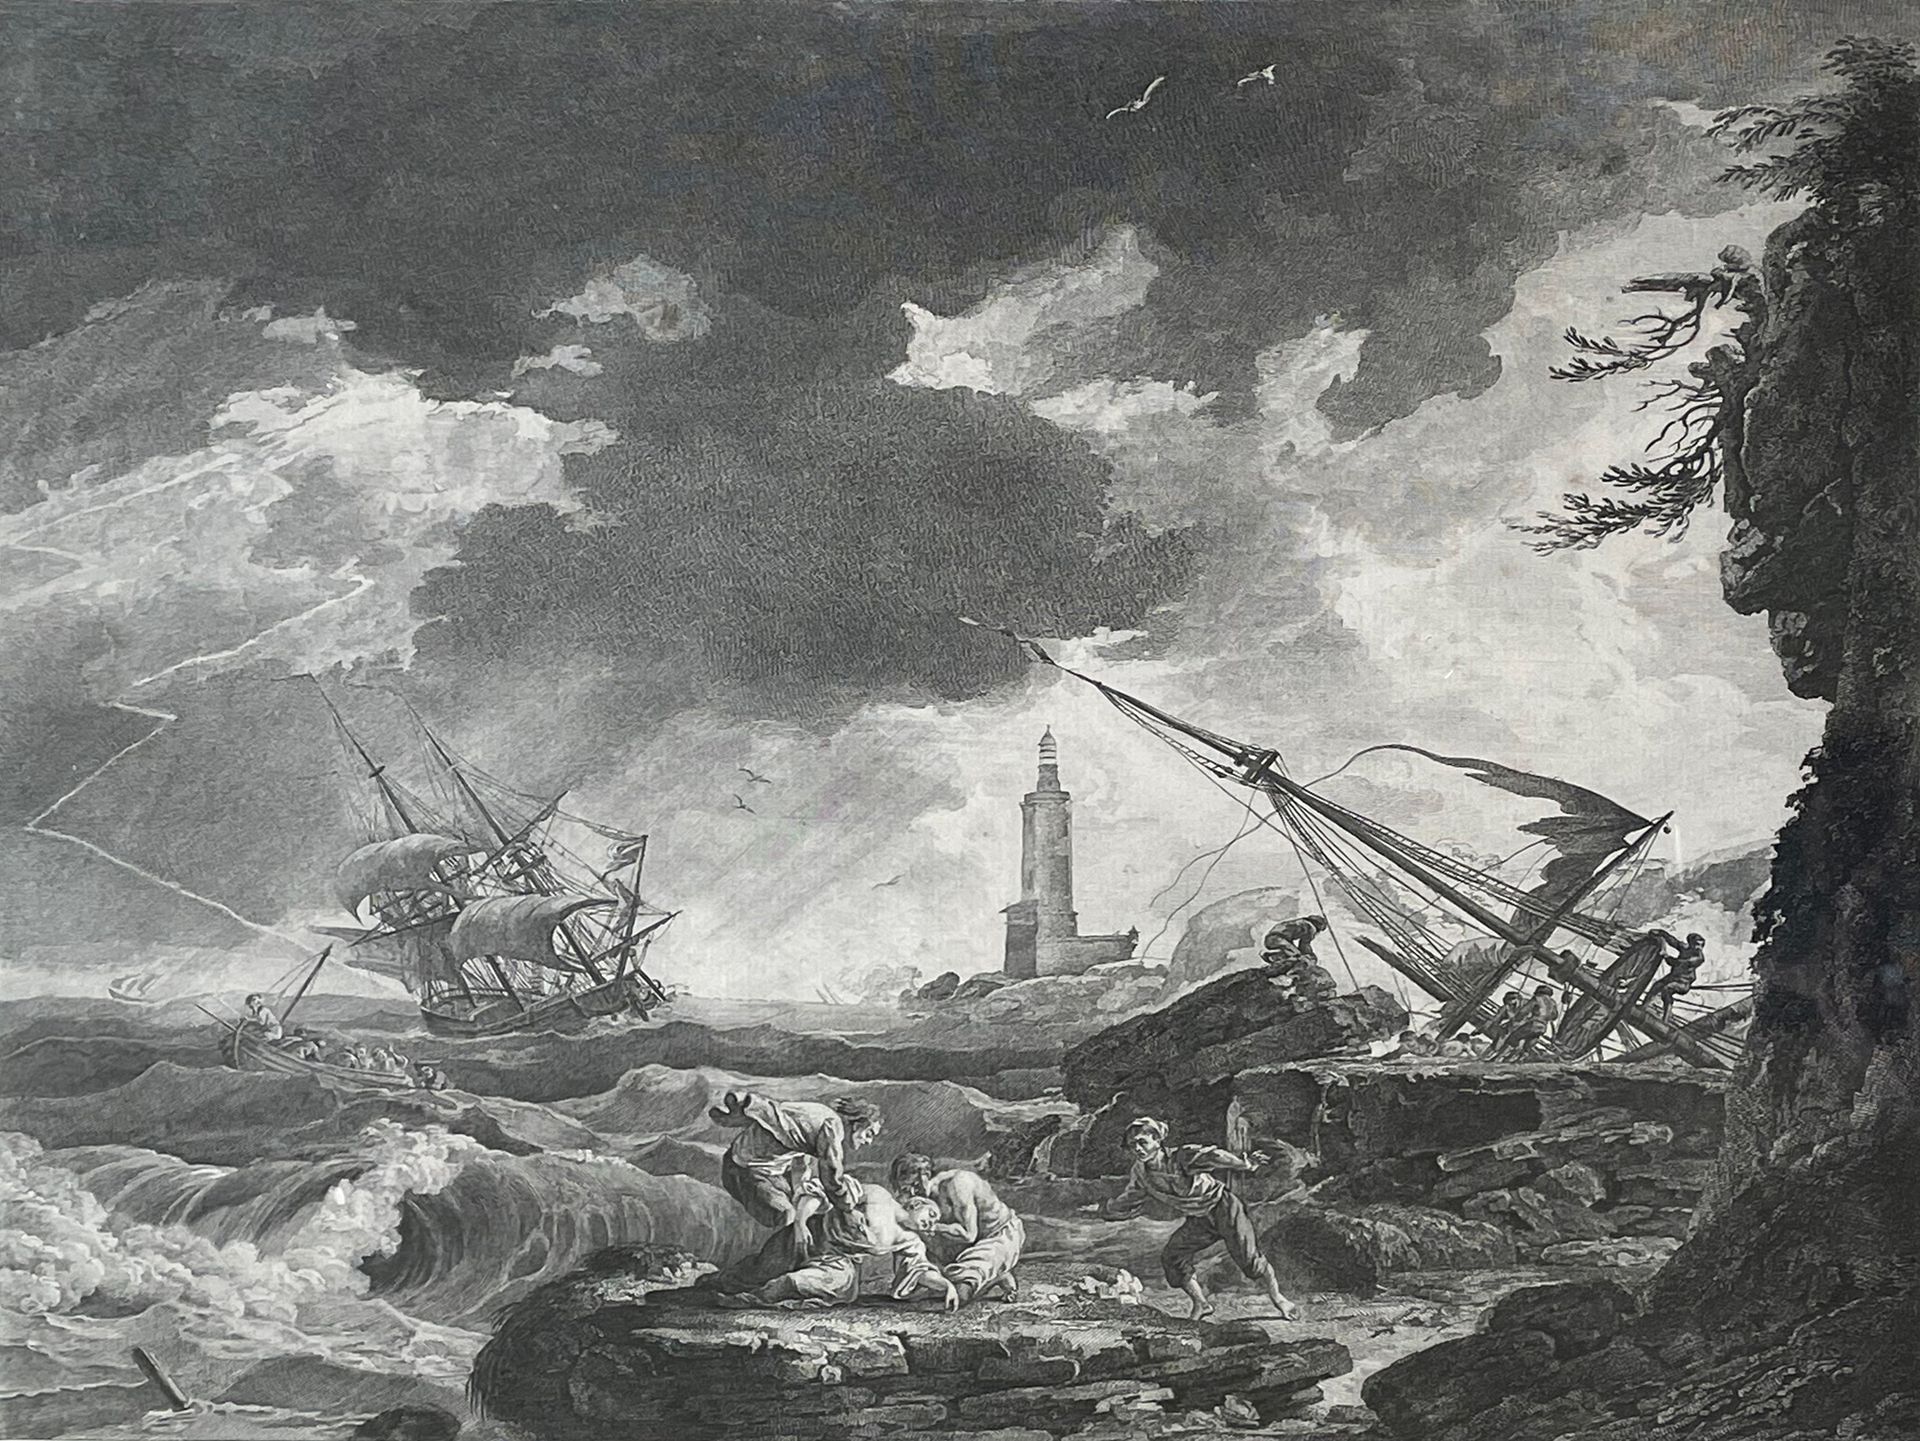 Joseph VERNET d'après 
The dangers of the sea
Engraving
50 x 69 cm (on view)